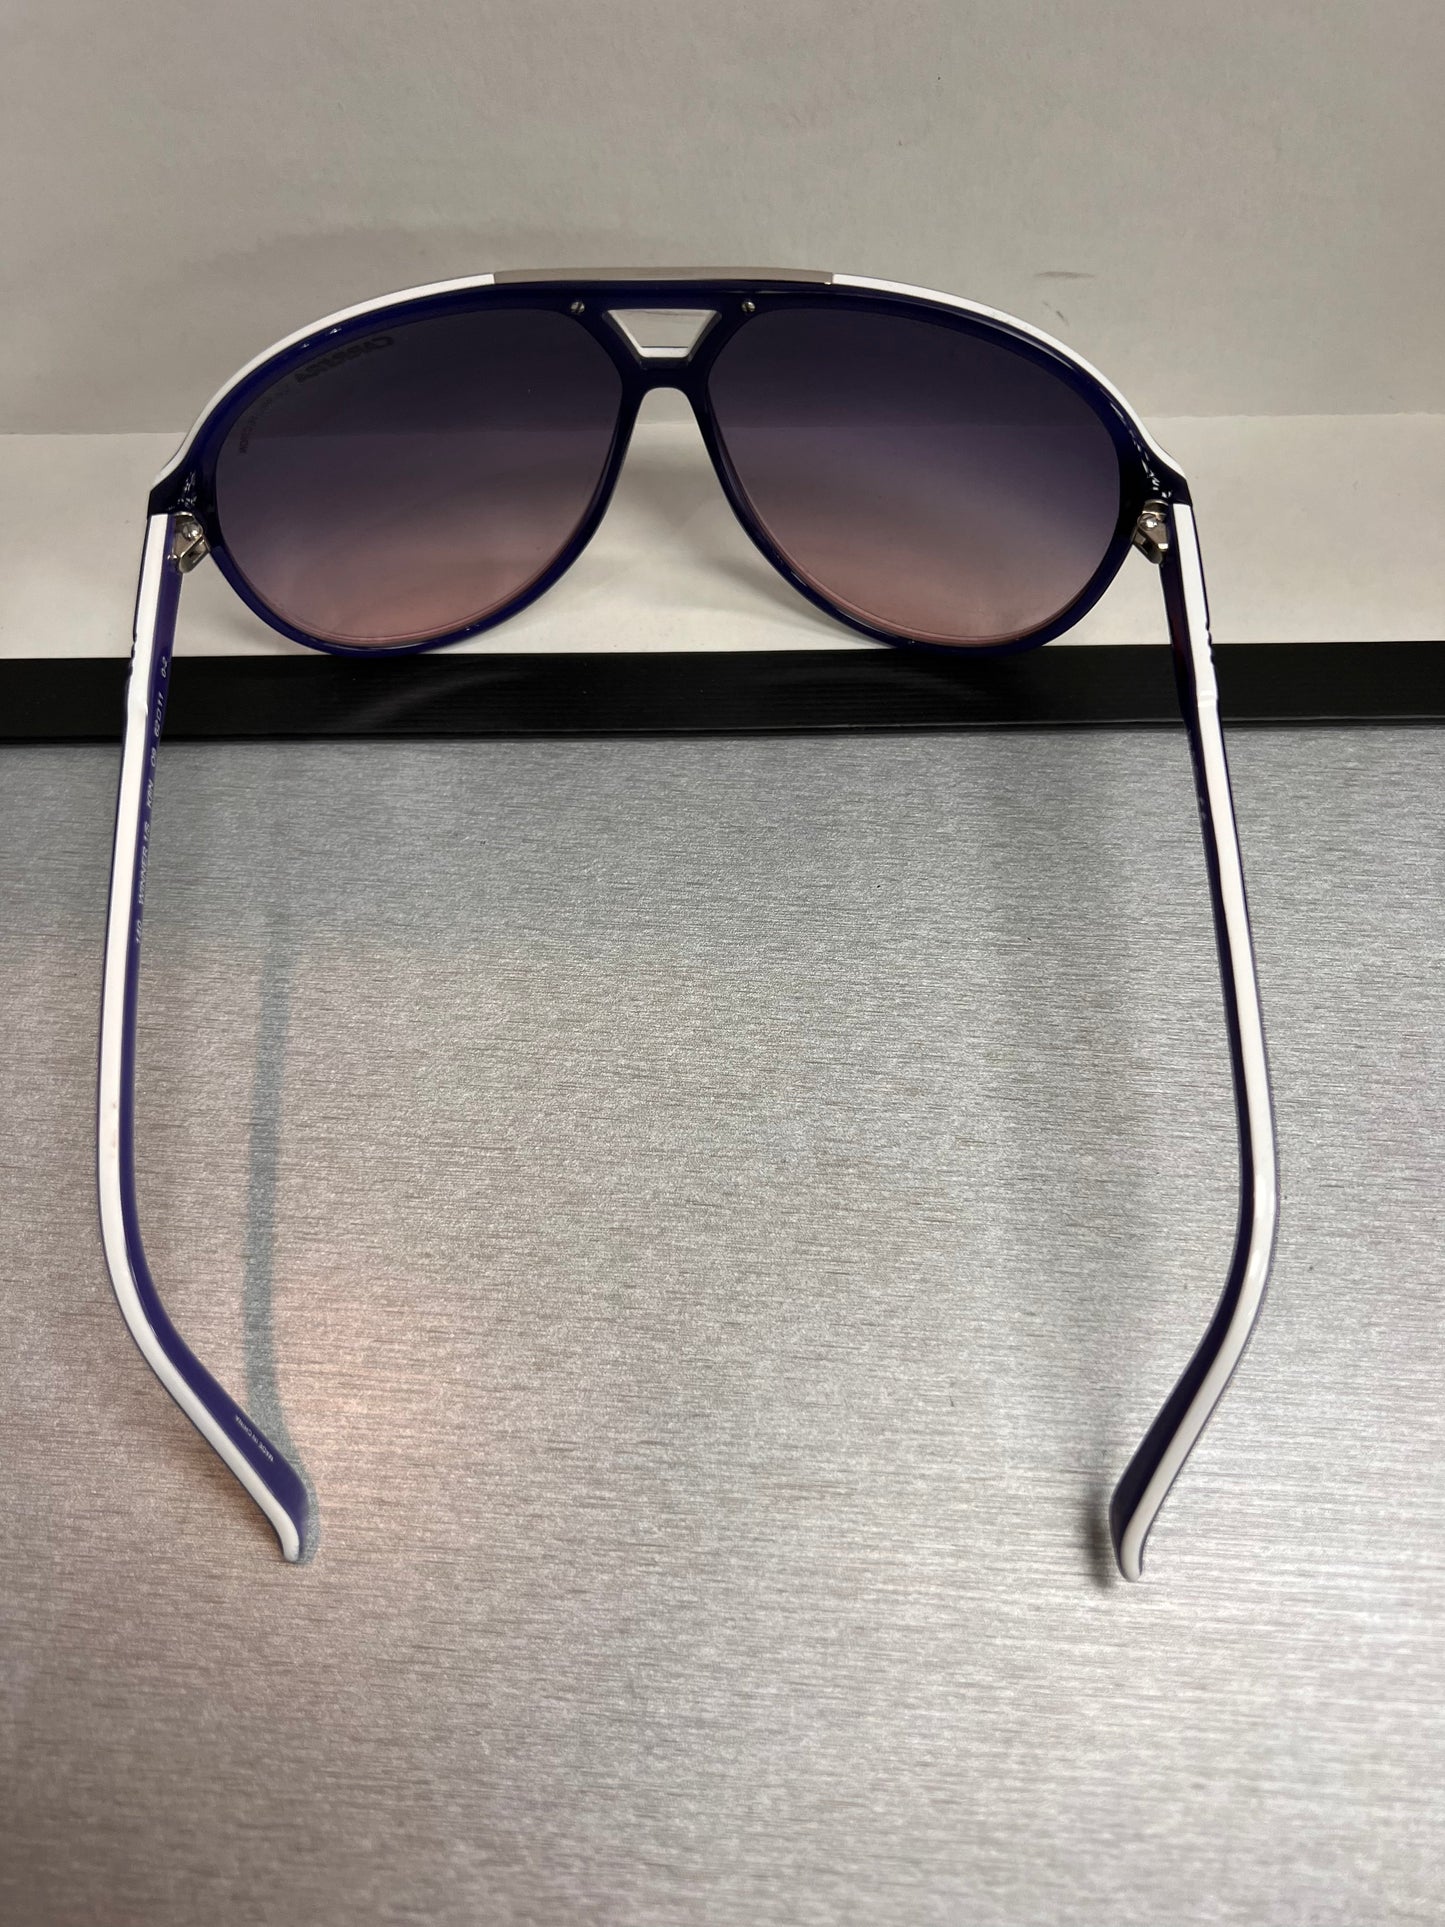 Sunglasses By Carrera Y Carrera